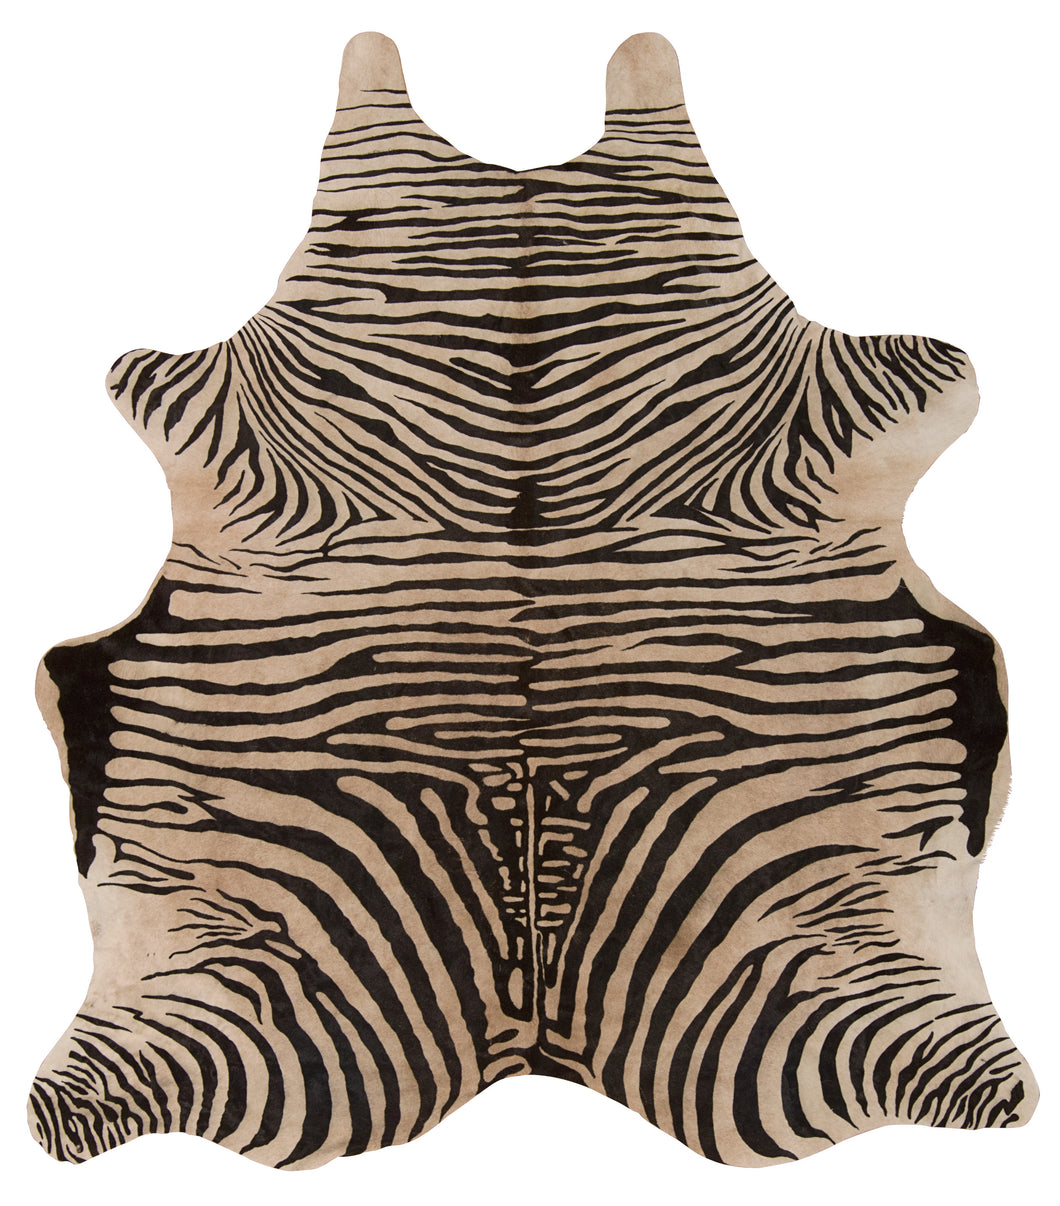 Mina Victory Free Form Hide Zebra Couture Rug IM110 6'X7'